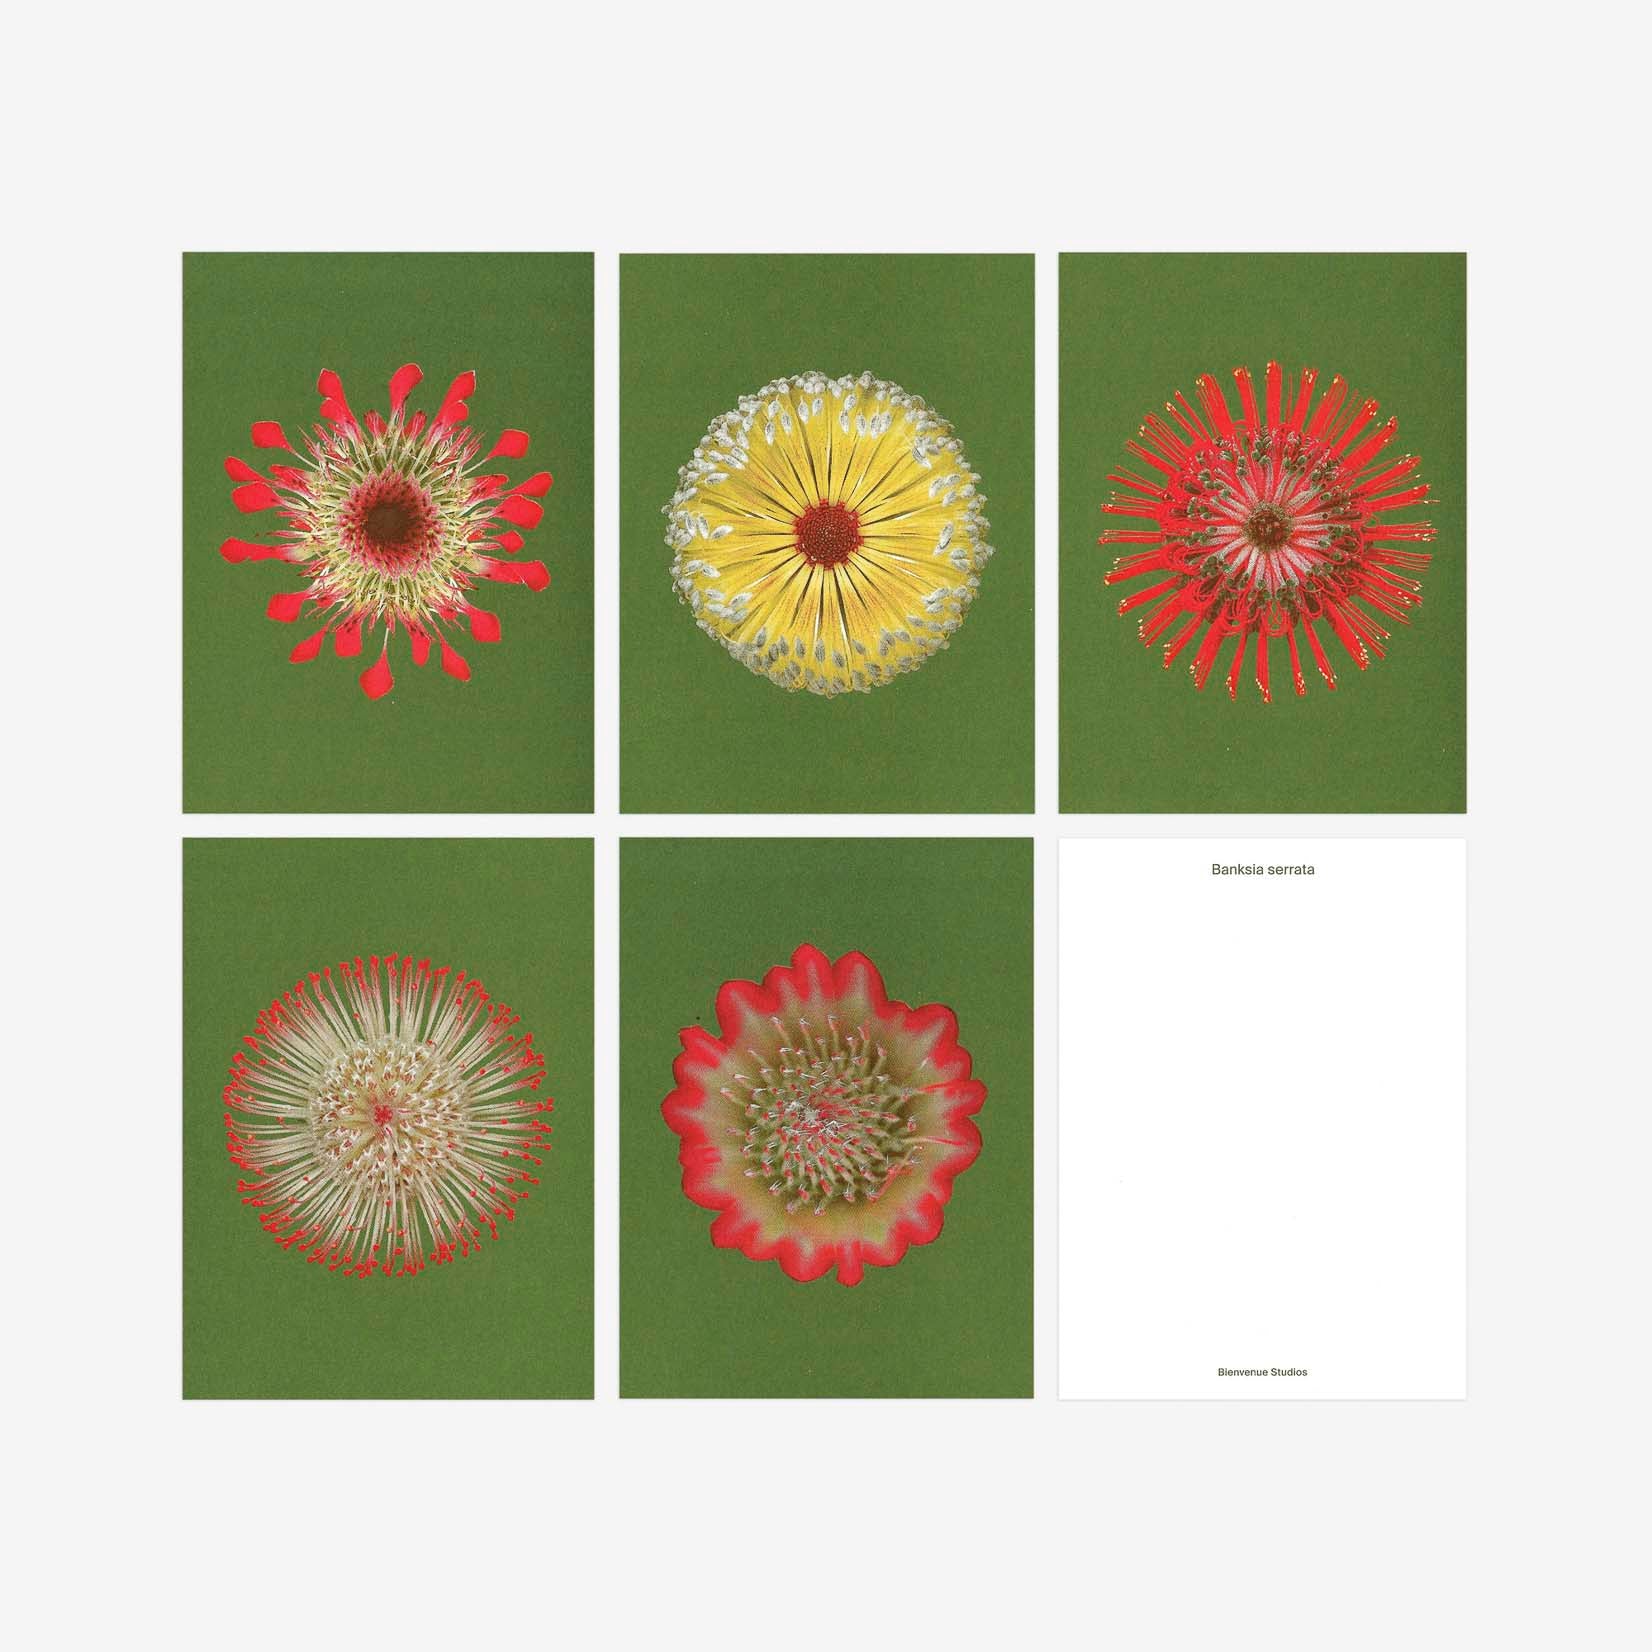 Bienvenue Studios Karten Small Print Collection Fire Flowers Artprints Natur Blumen